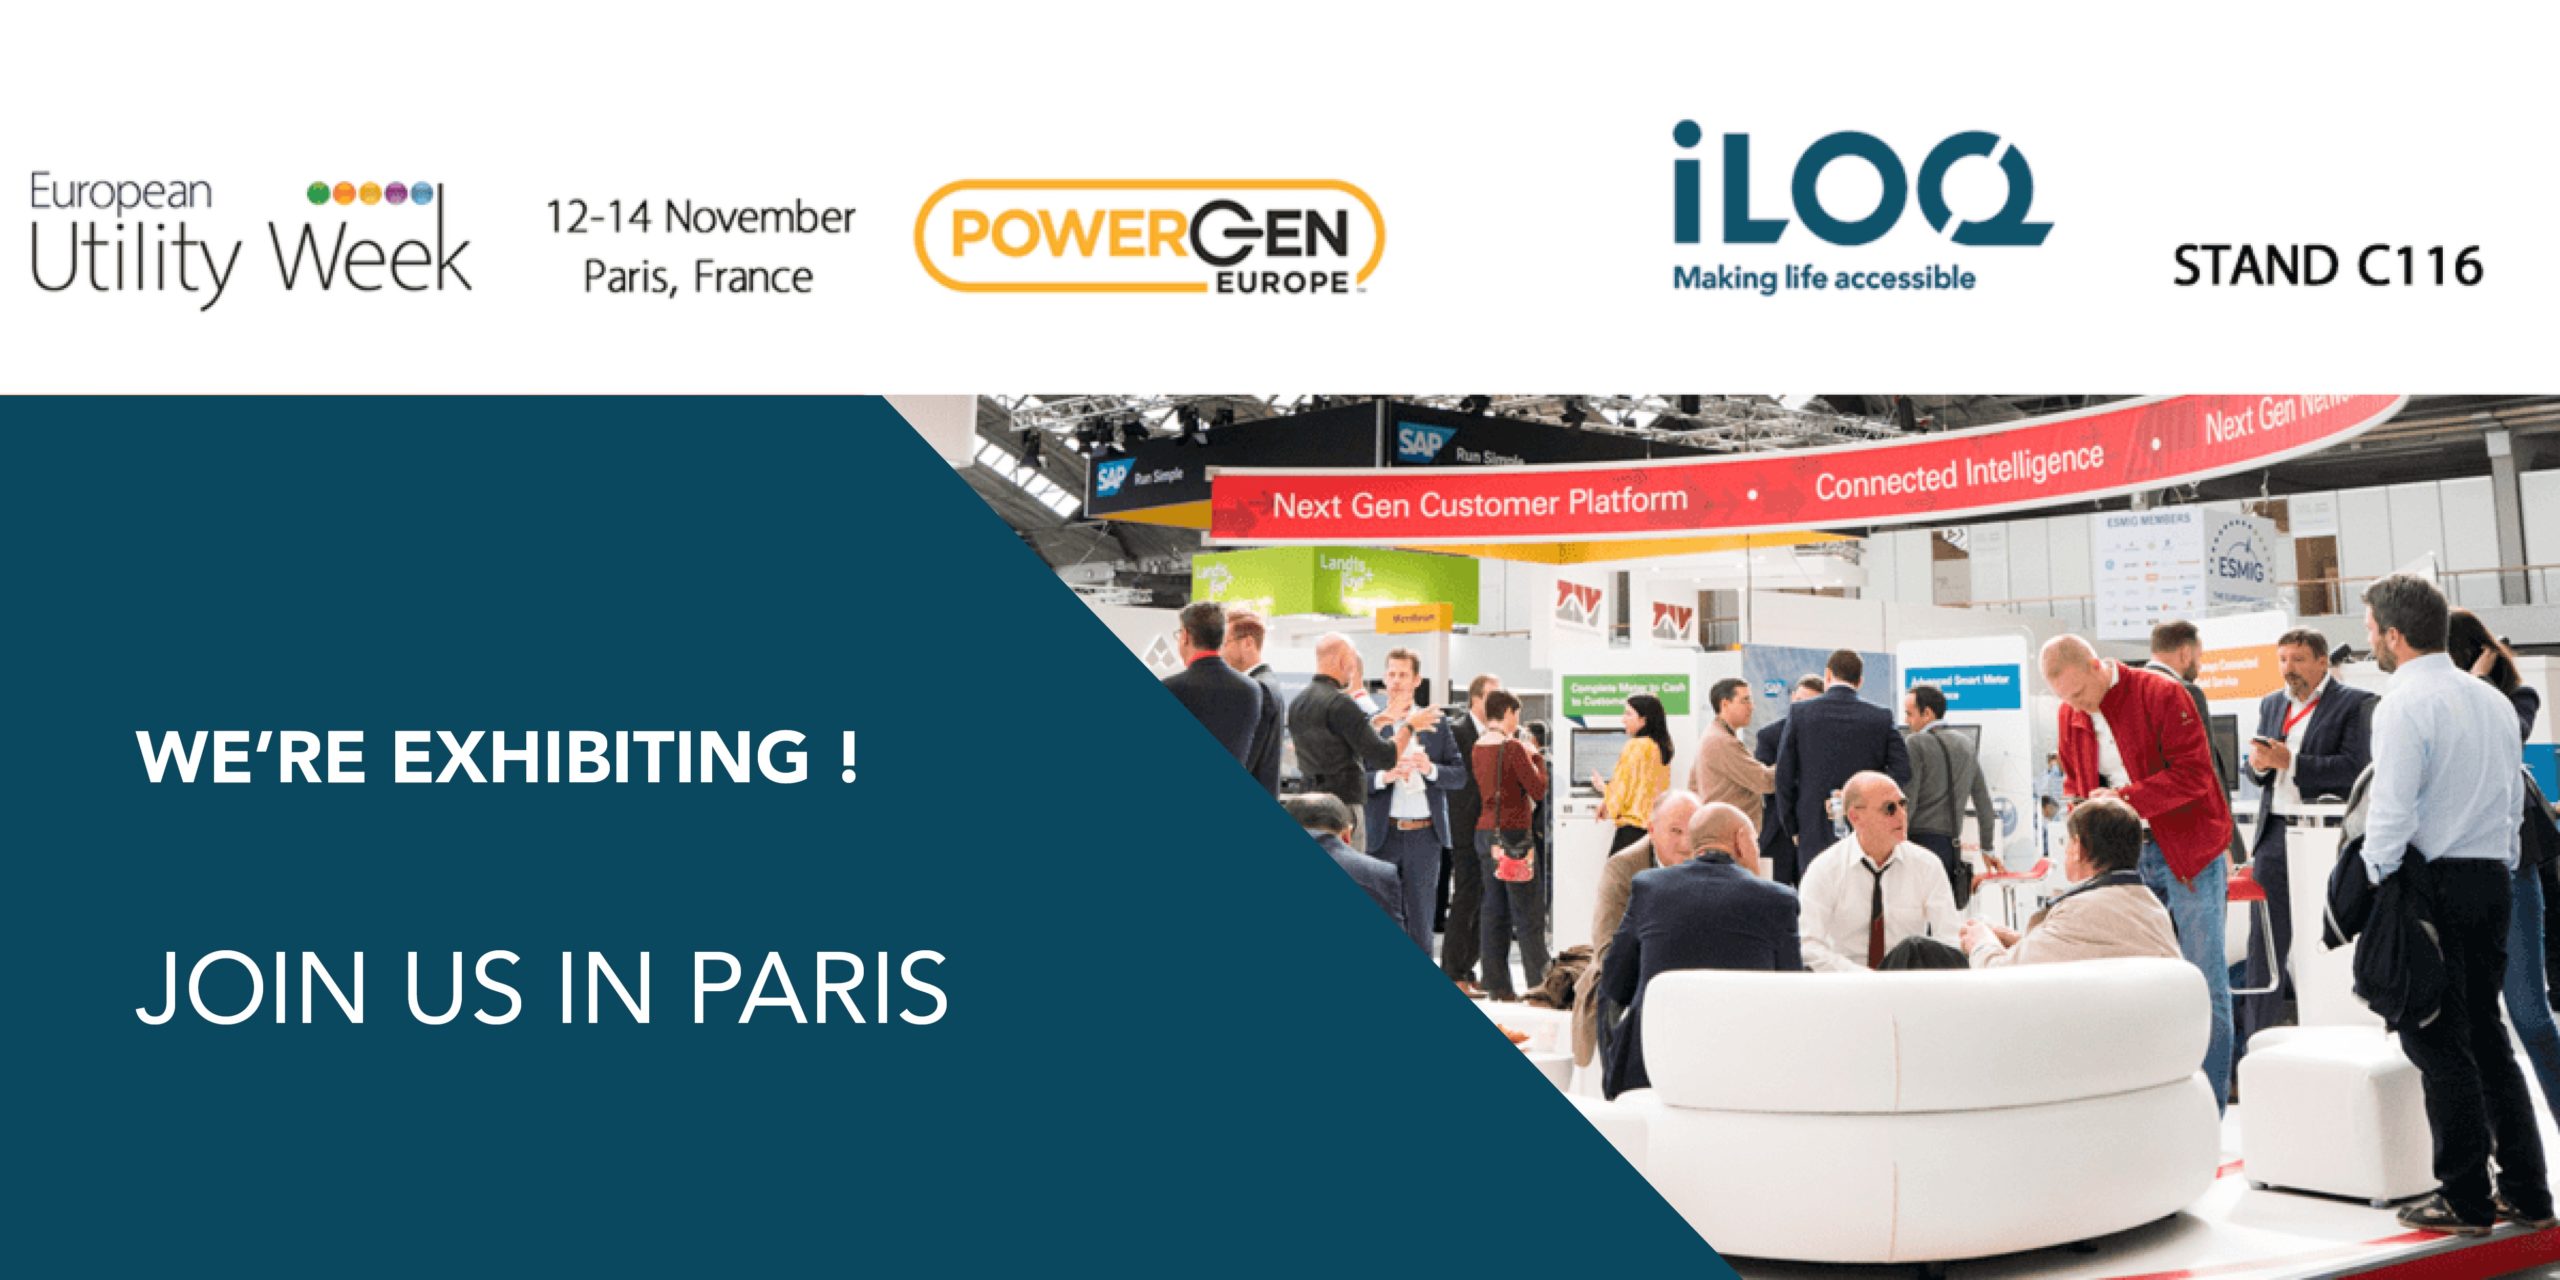 iLOQ is exhibiting at European Utility Week in Paris iLOQ